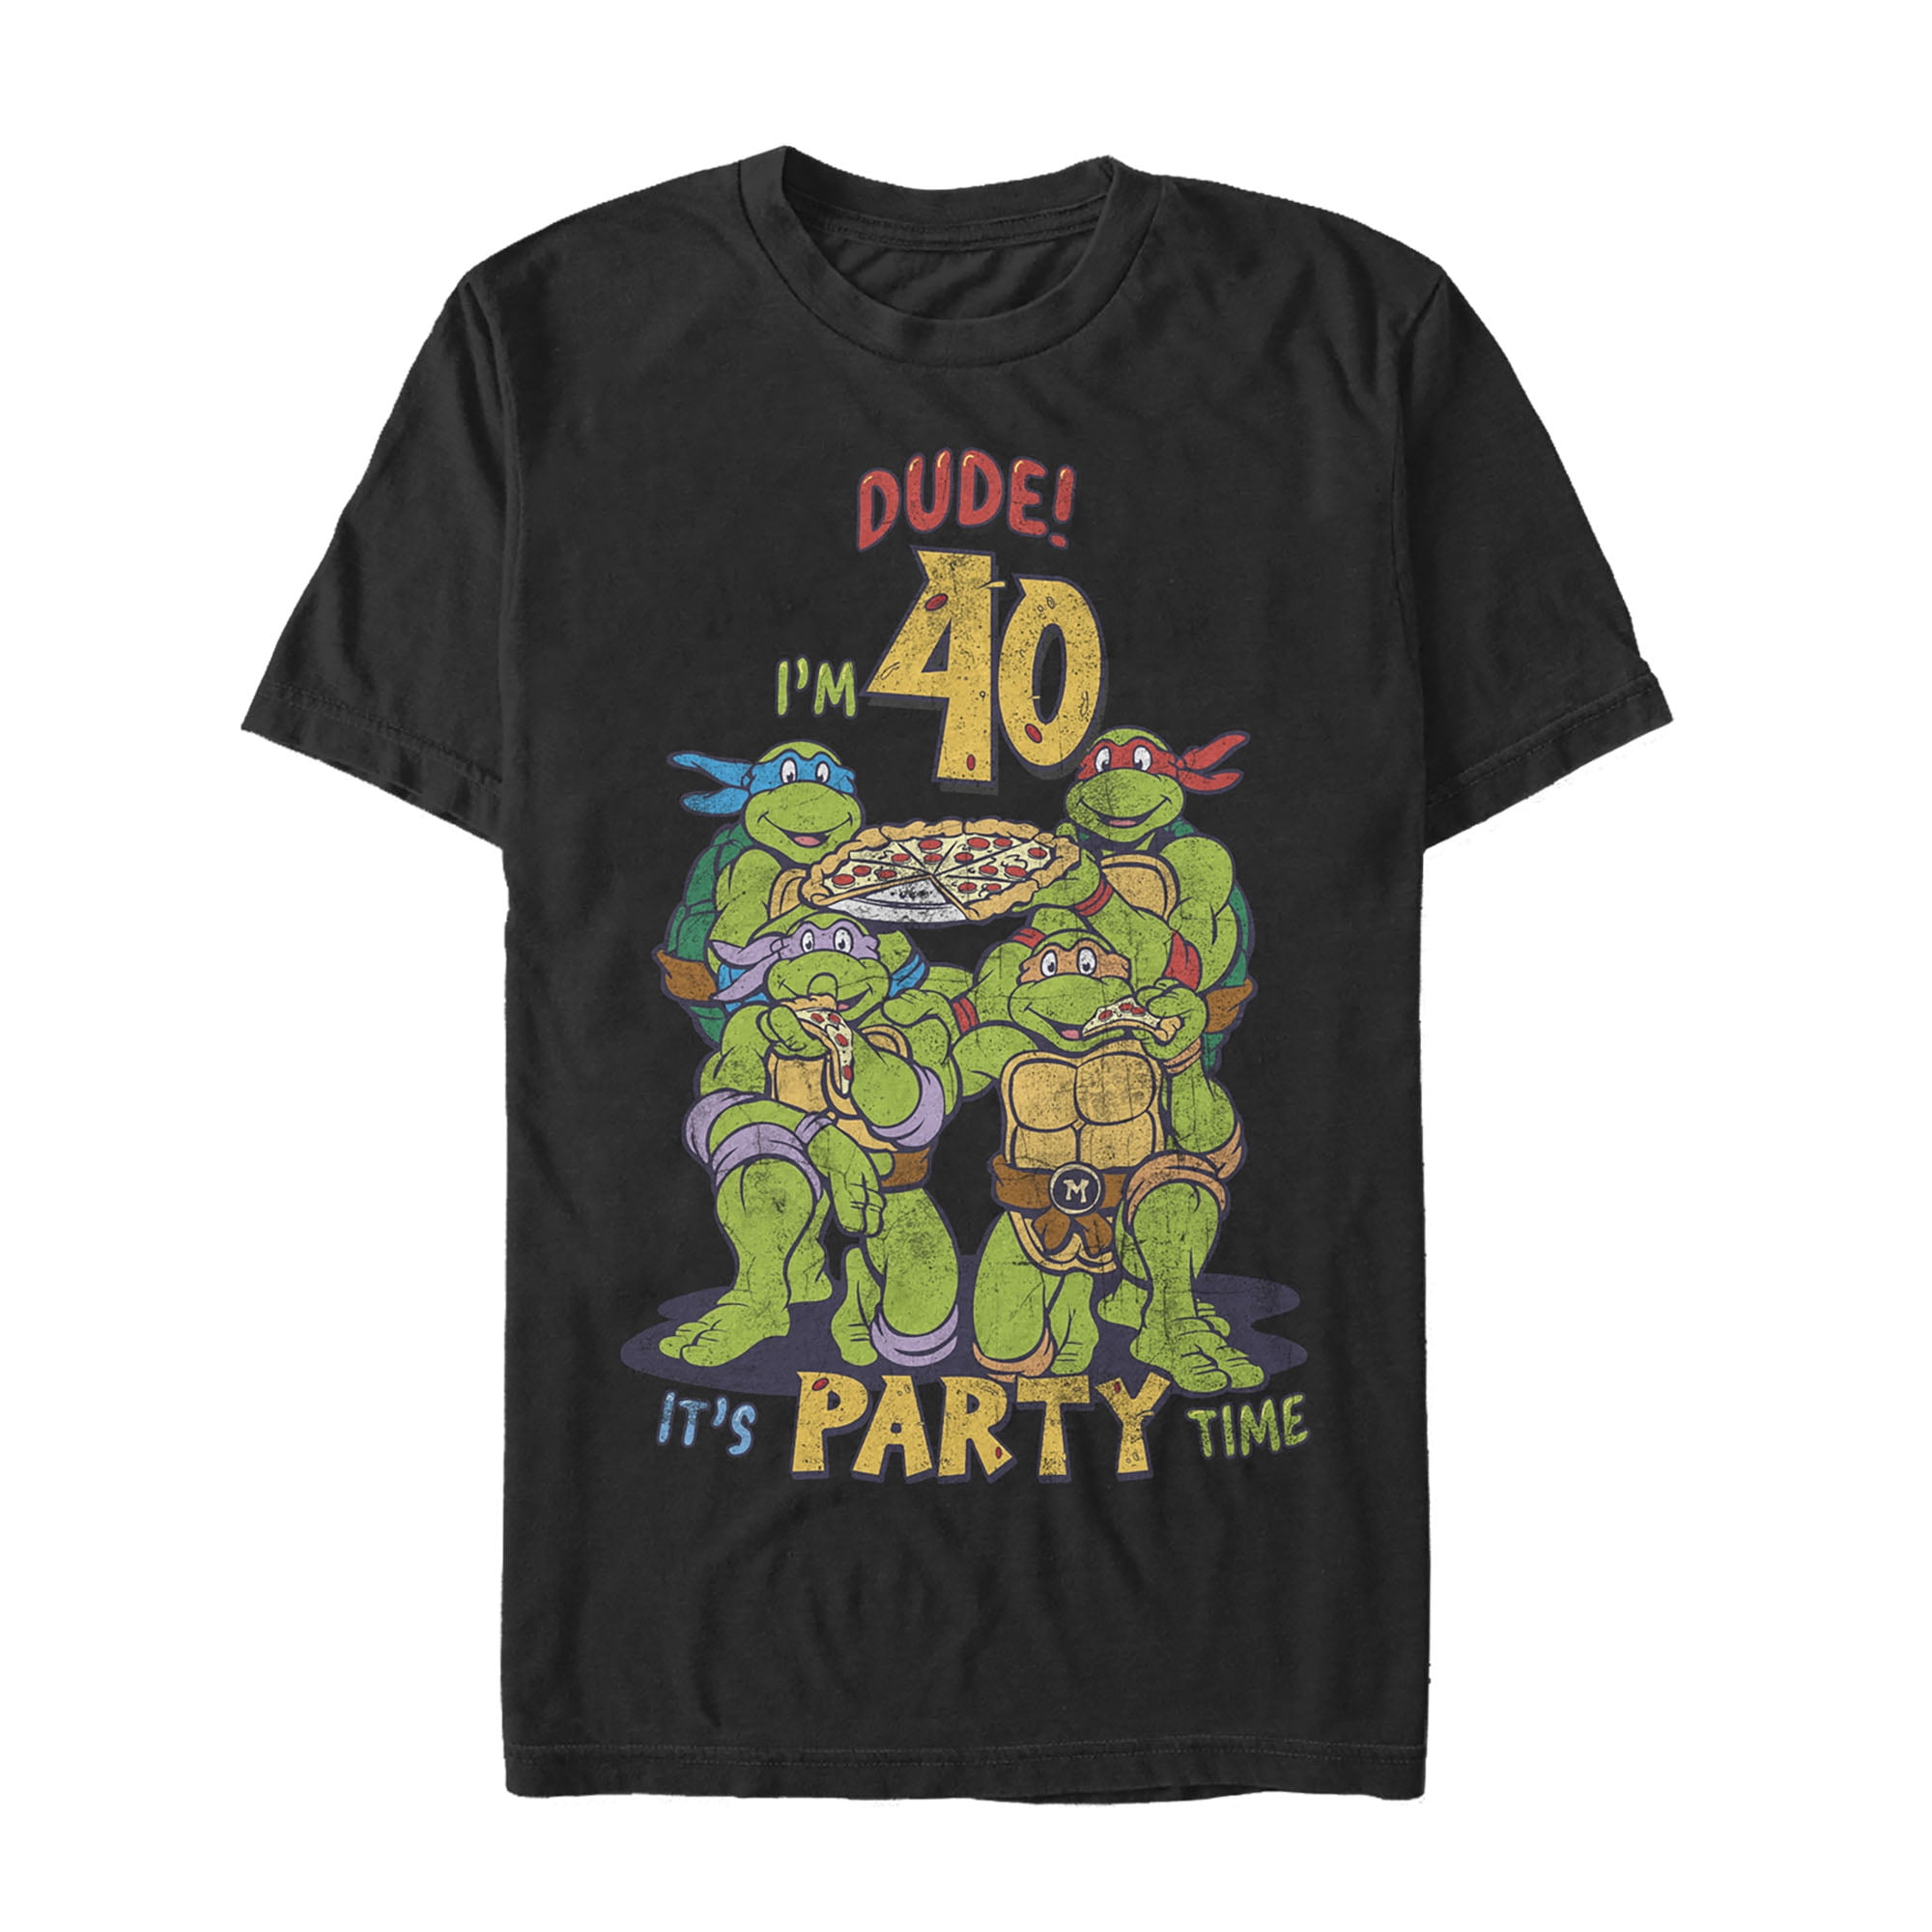 Custom Birthday Shirts, Teenage Mutant Ninja Turtle Original Comic